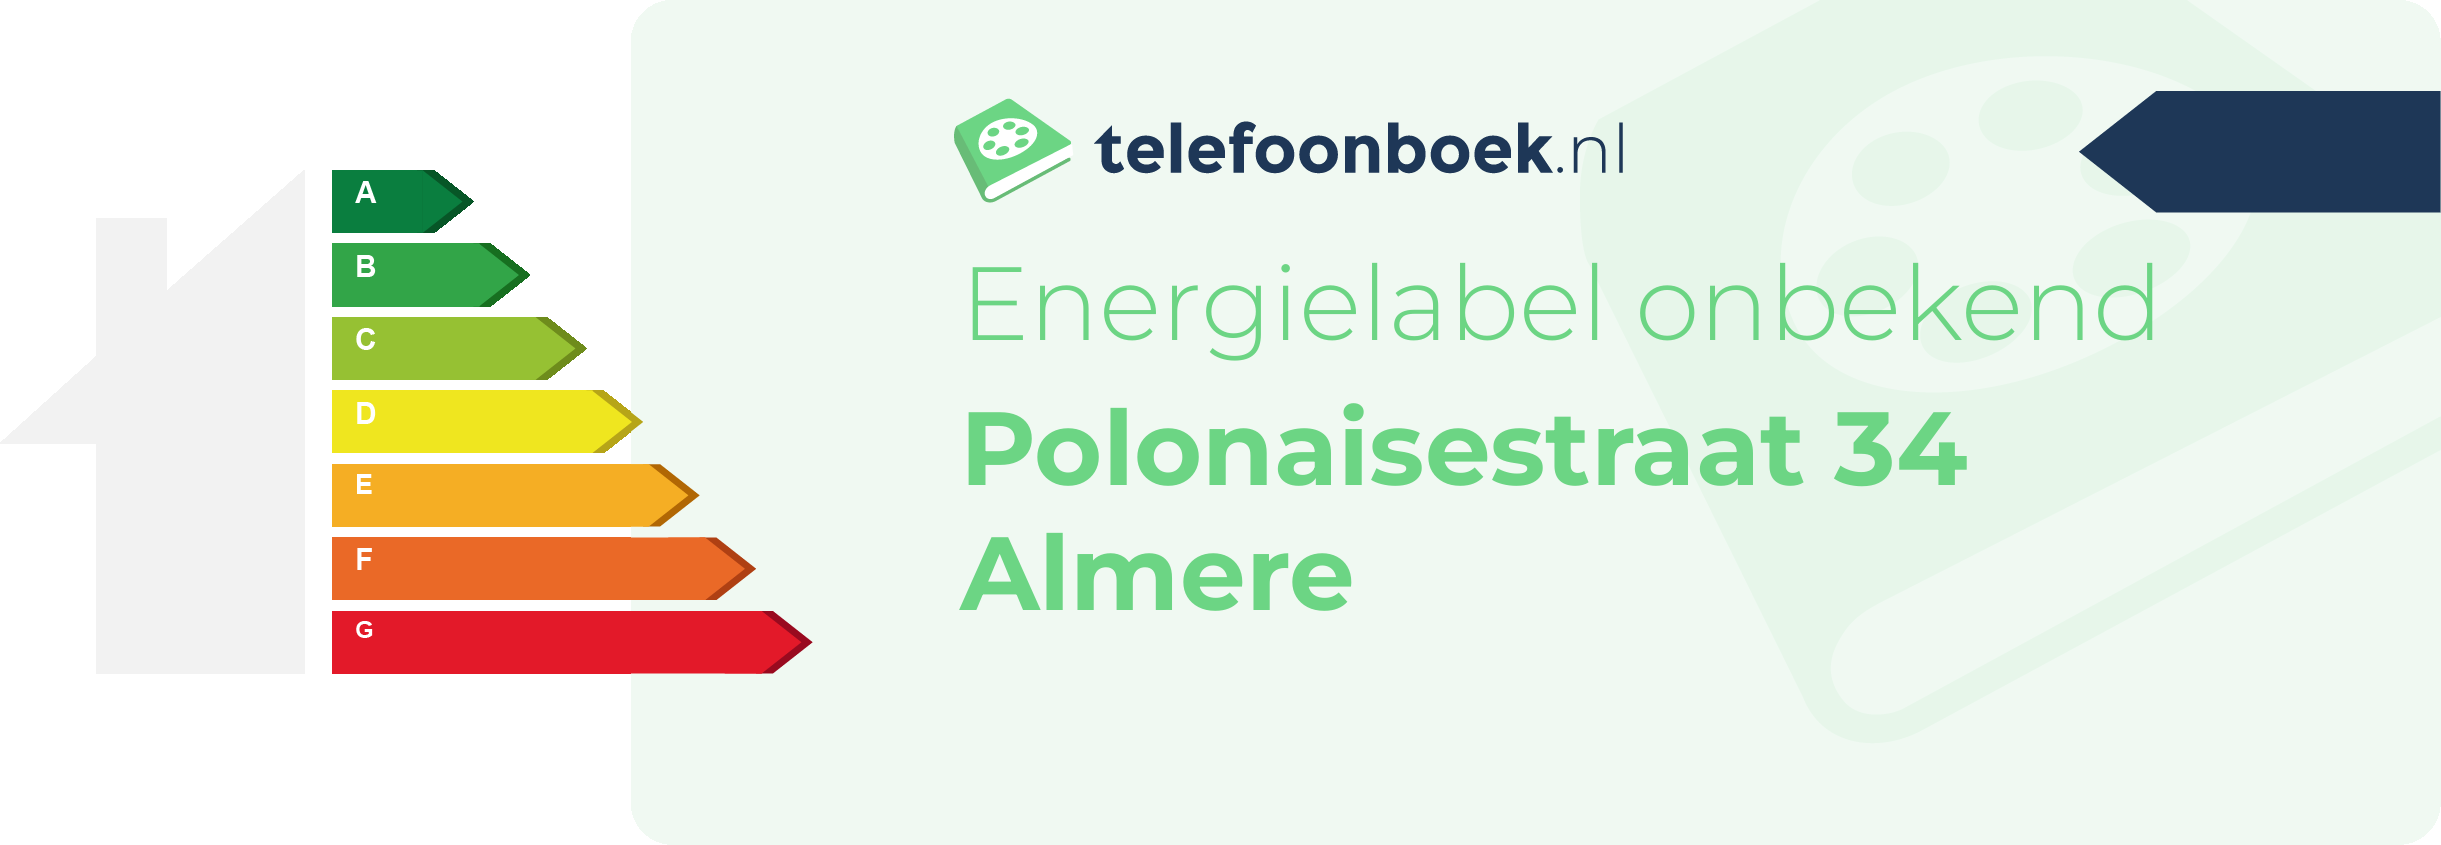 Energielabel Polonaisestraat 34 Almere